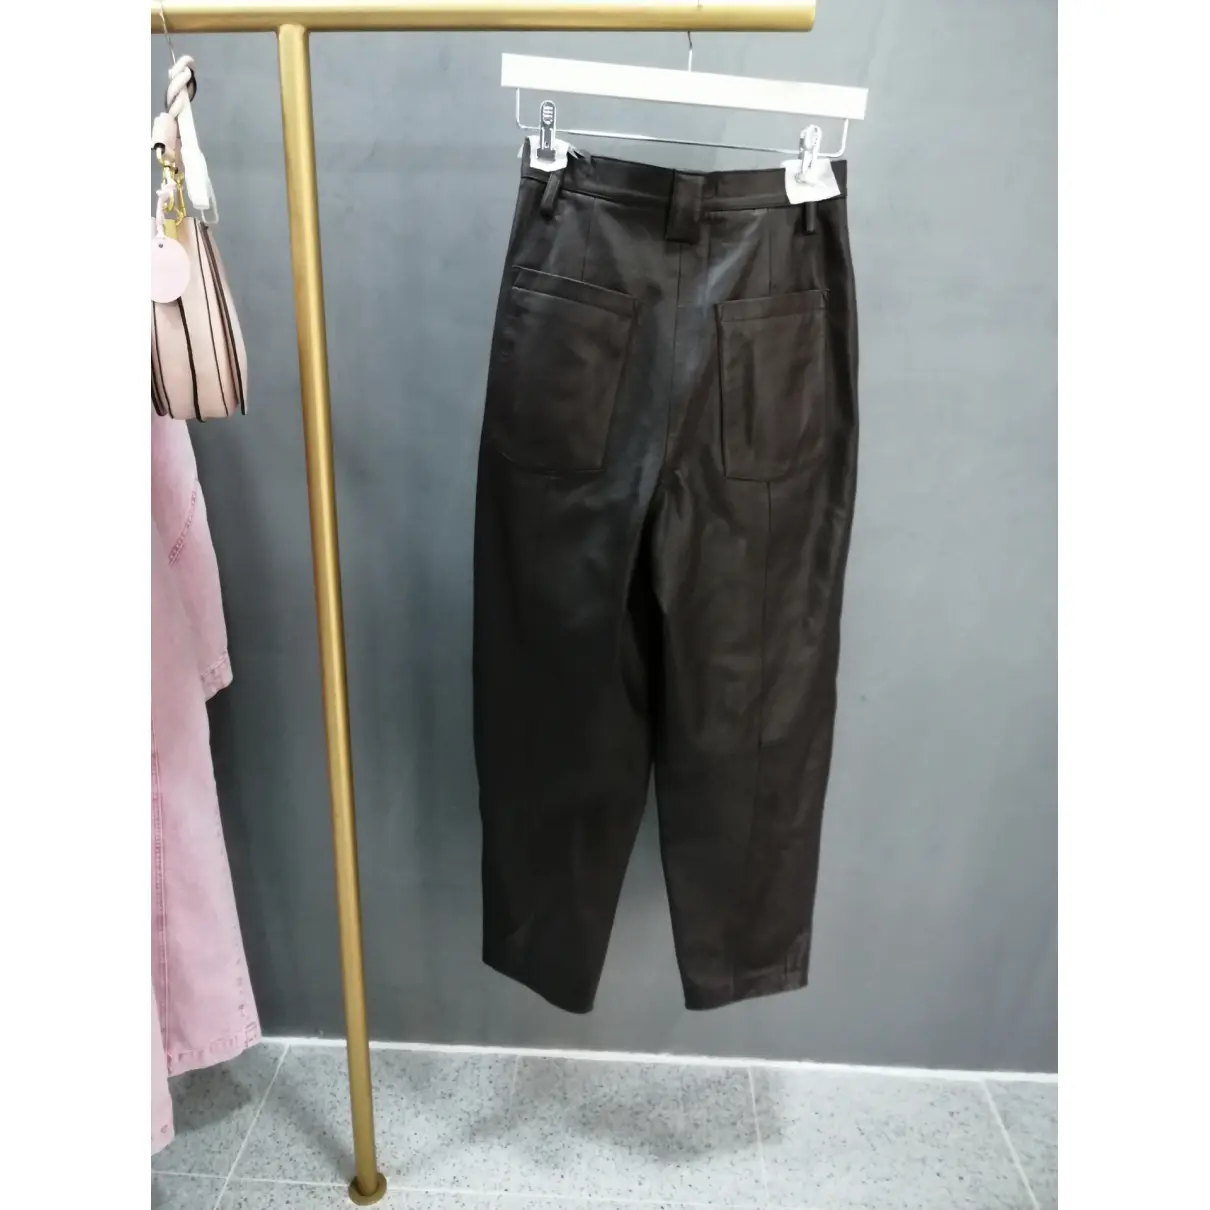 Leather carot pants Remain Biger christensen